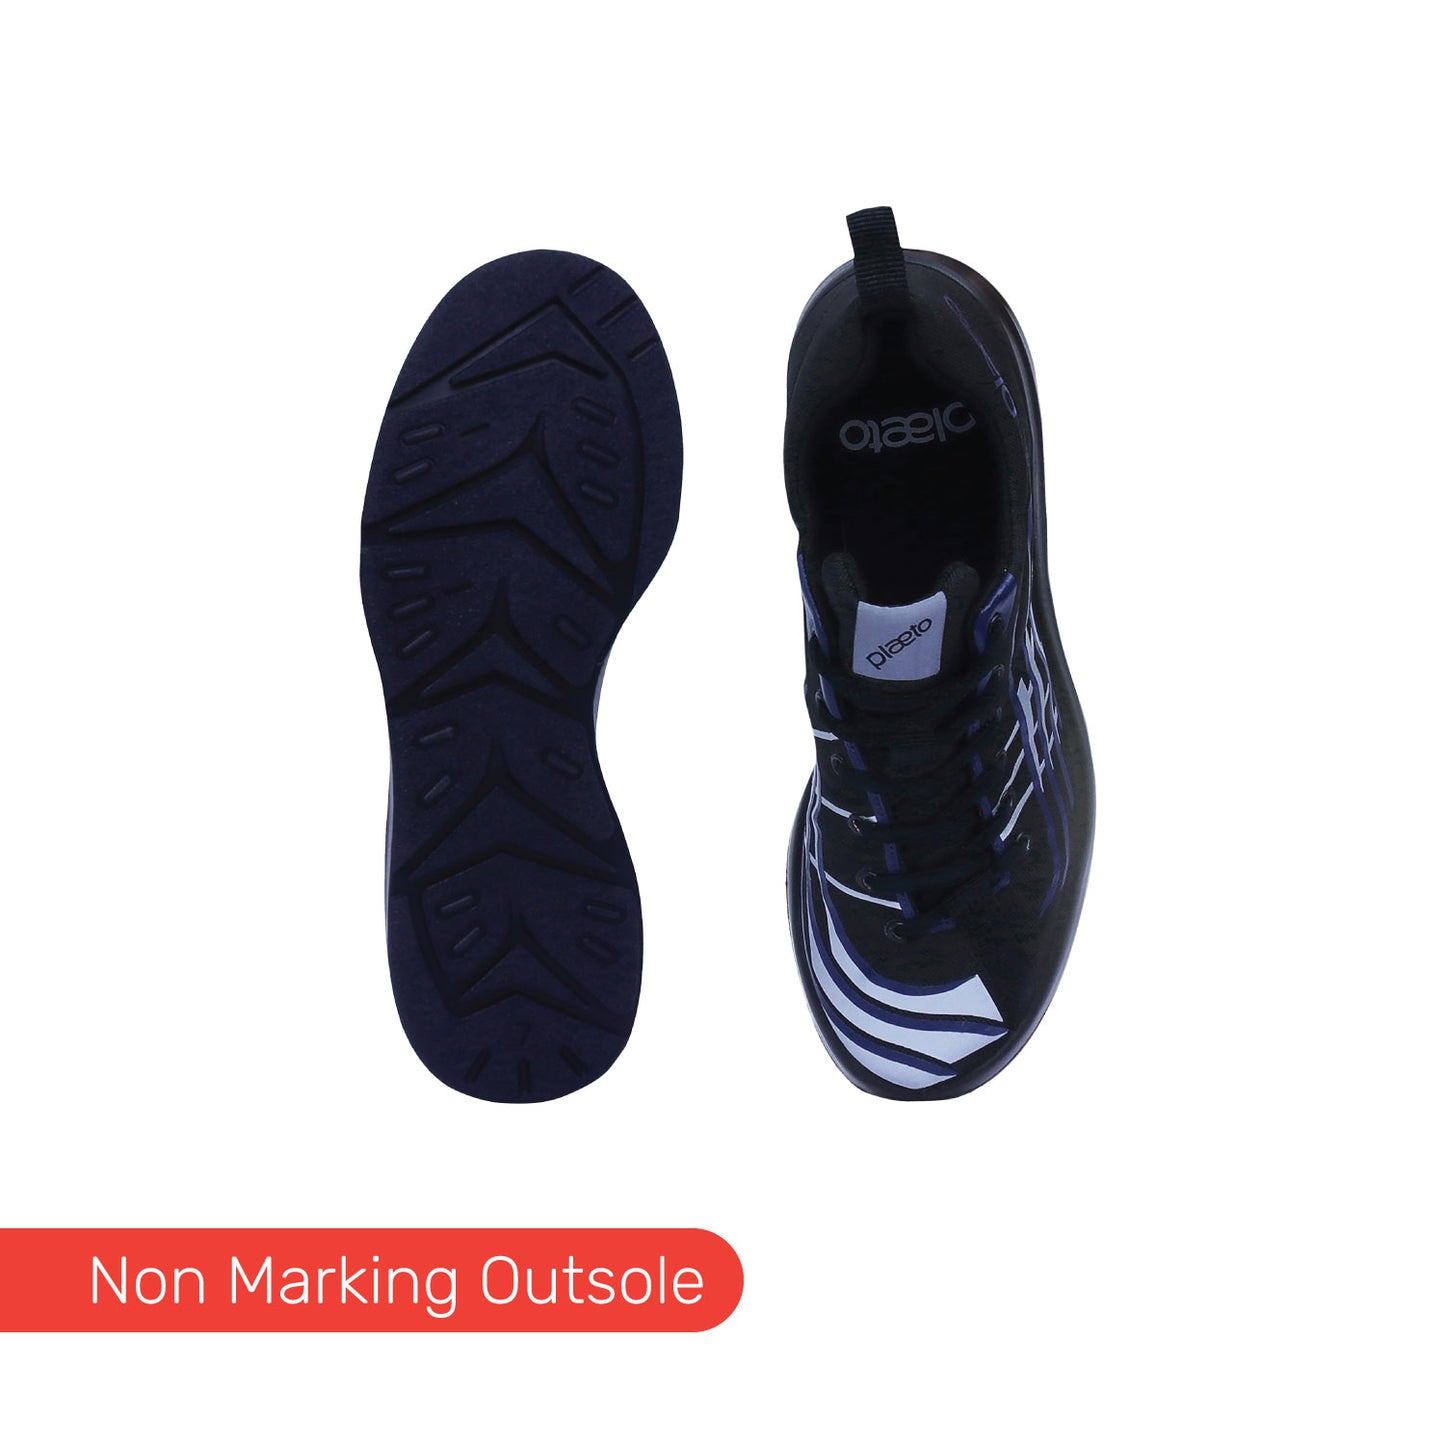 Nova Men's Multiplay Sports Shoes - Black / Navy Blue